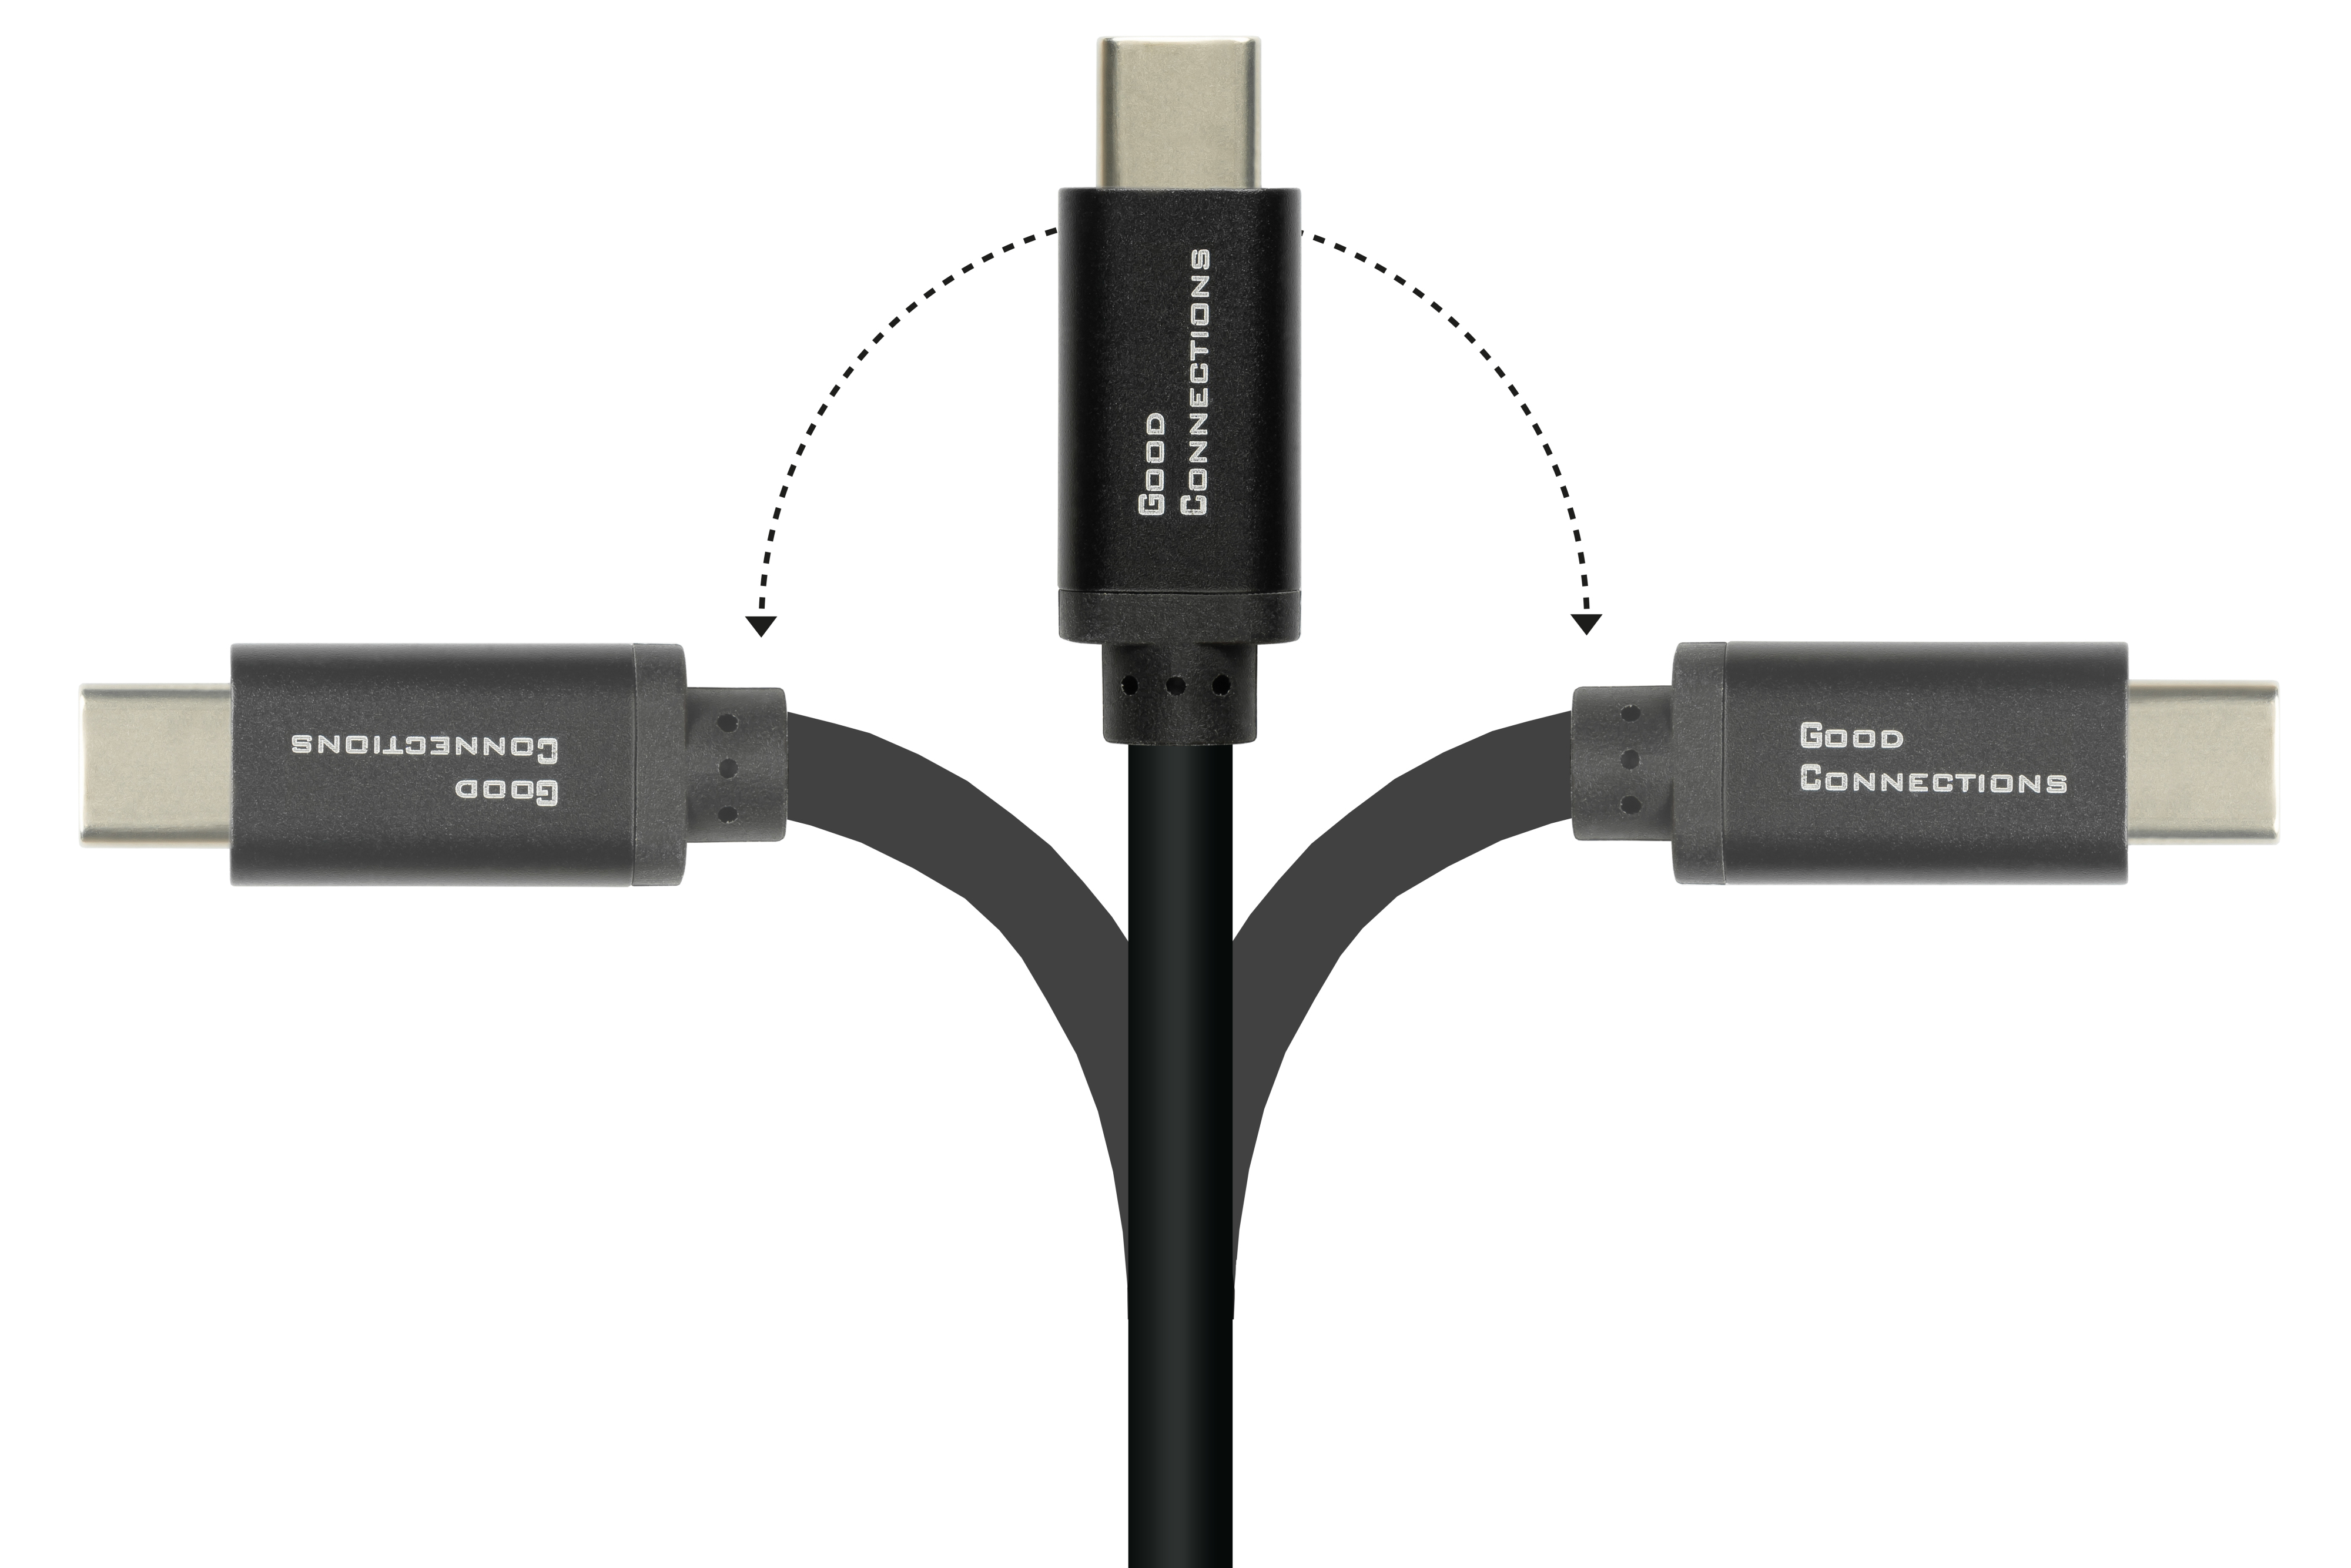 USB (PD3) E-Marker, GOOD 2.0, Power CONNECTIONS USB-C™ 100W, mit 5A SmartFLEX schwarz Lade- Datenkabe Delivery und